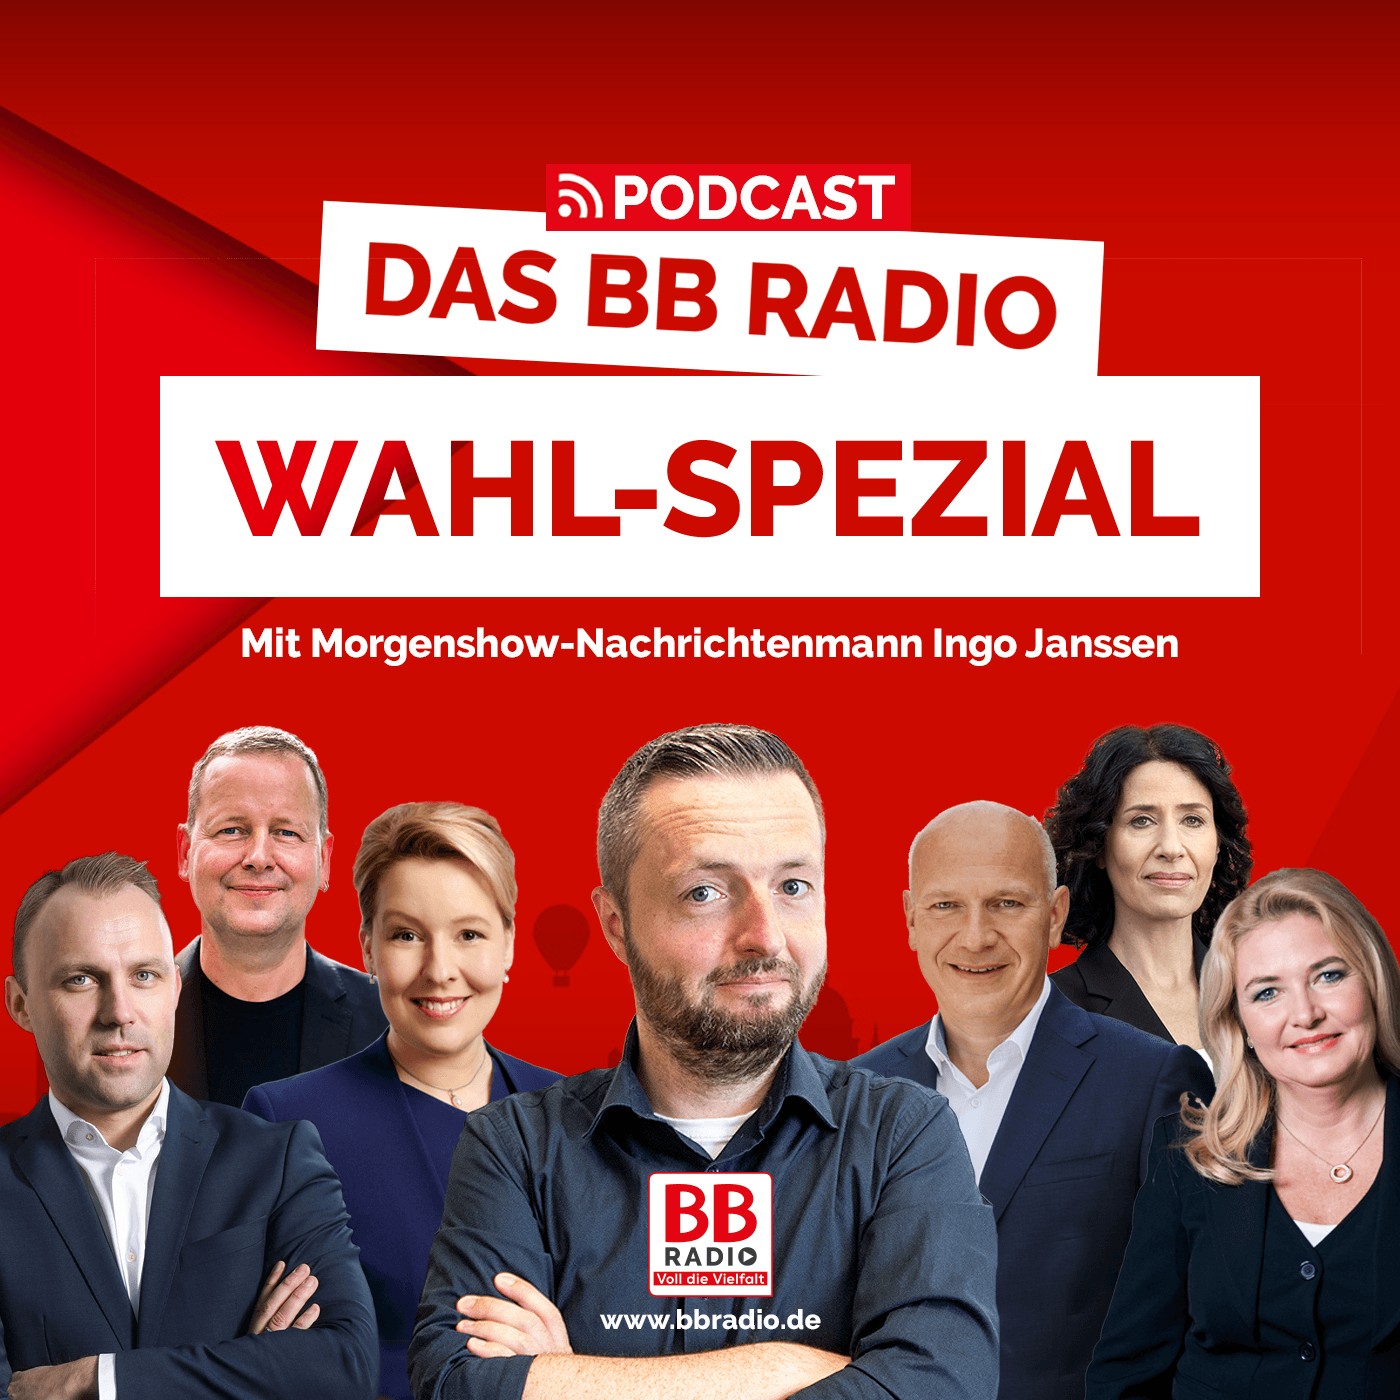 BB RADIO Wahl-Spezial